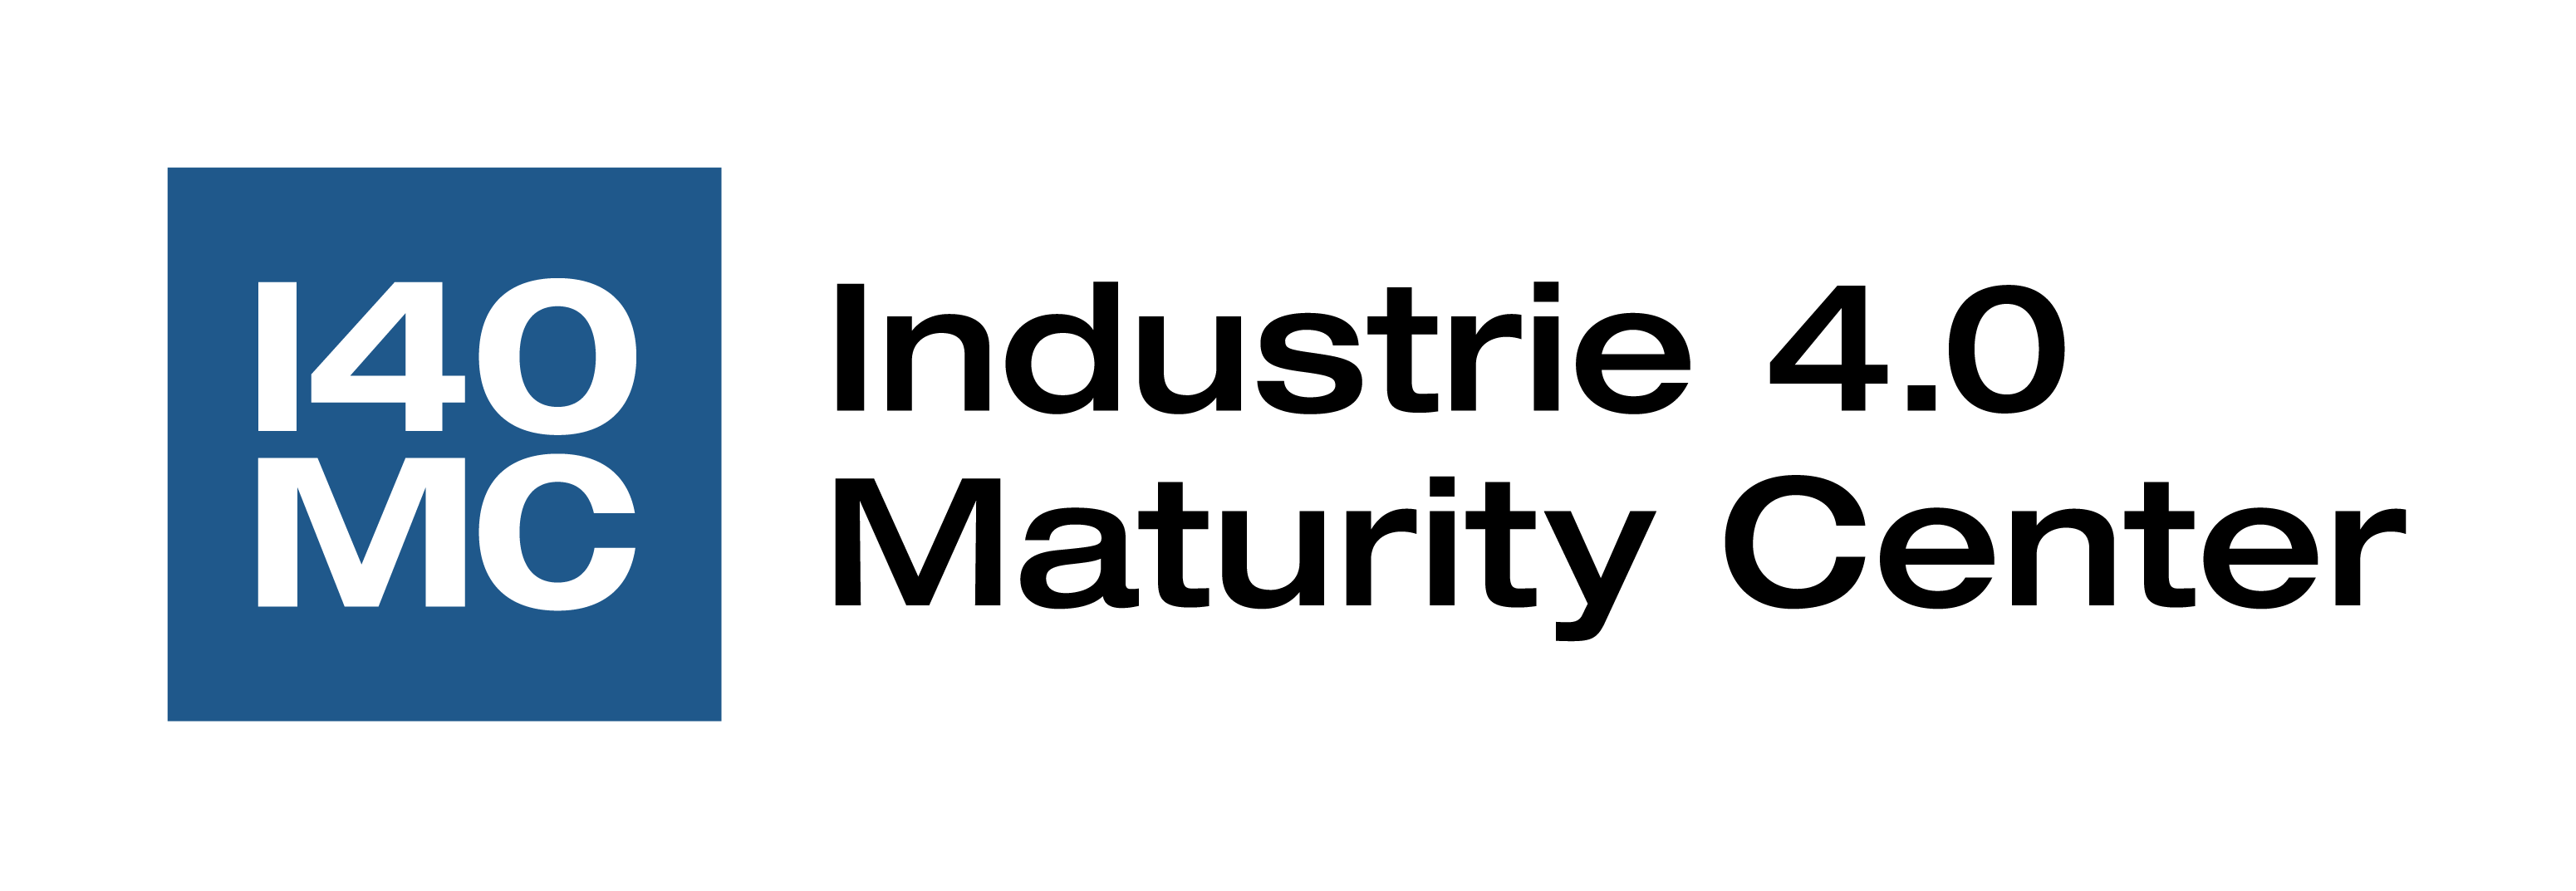 Logo des Industry 4.0 Maturity Centers